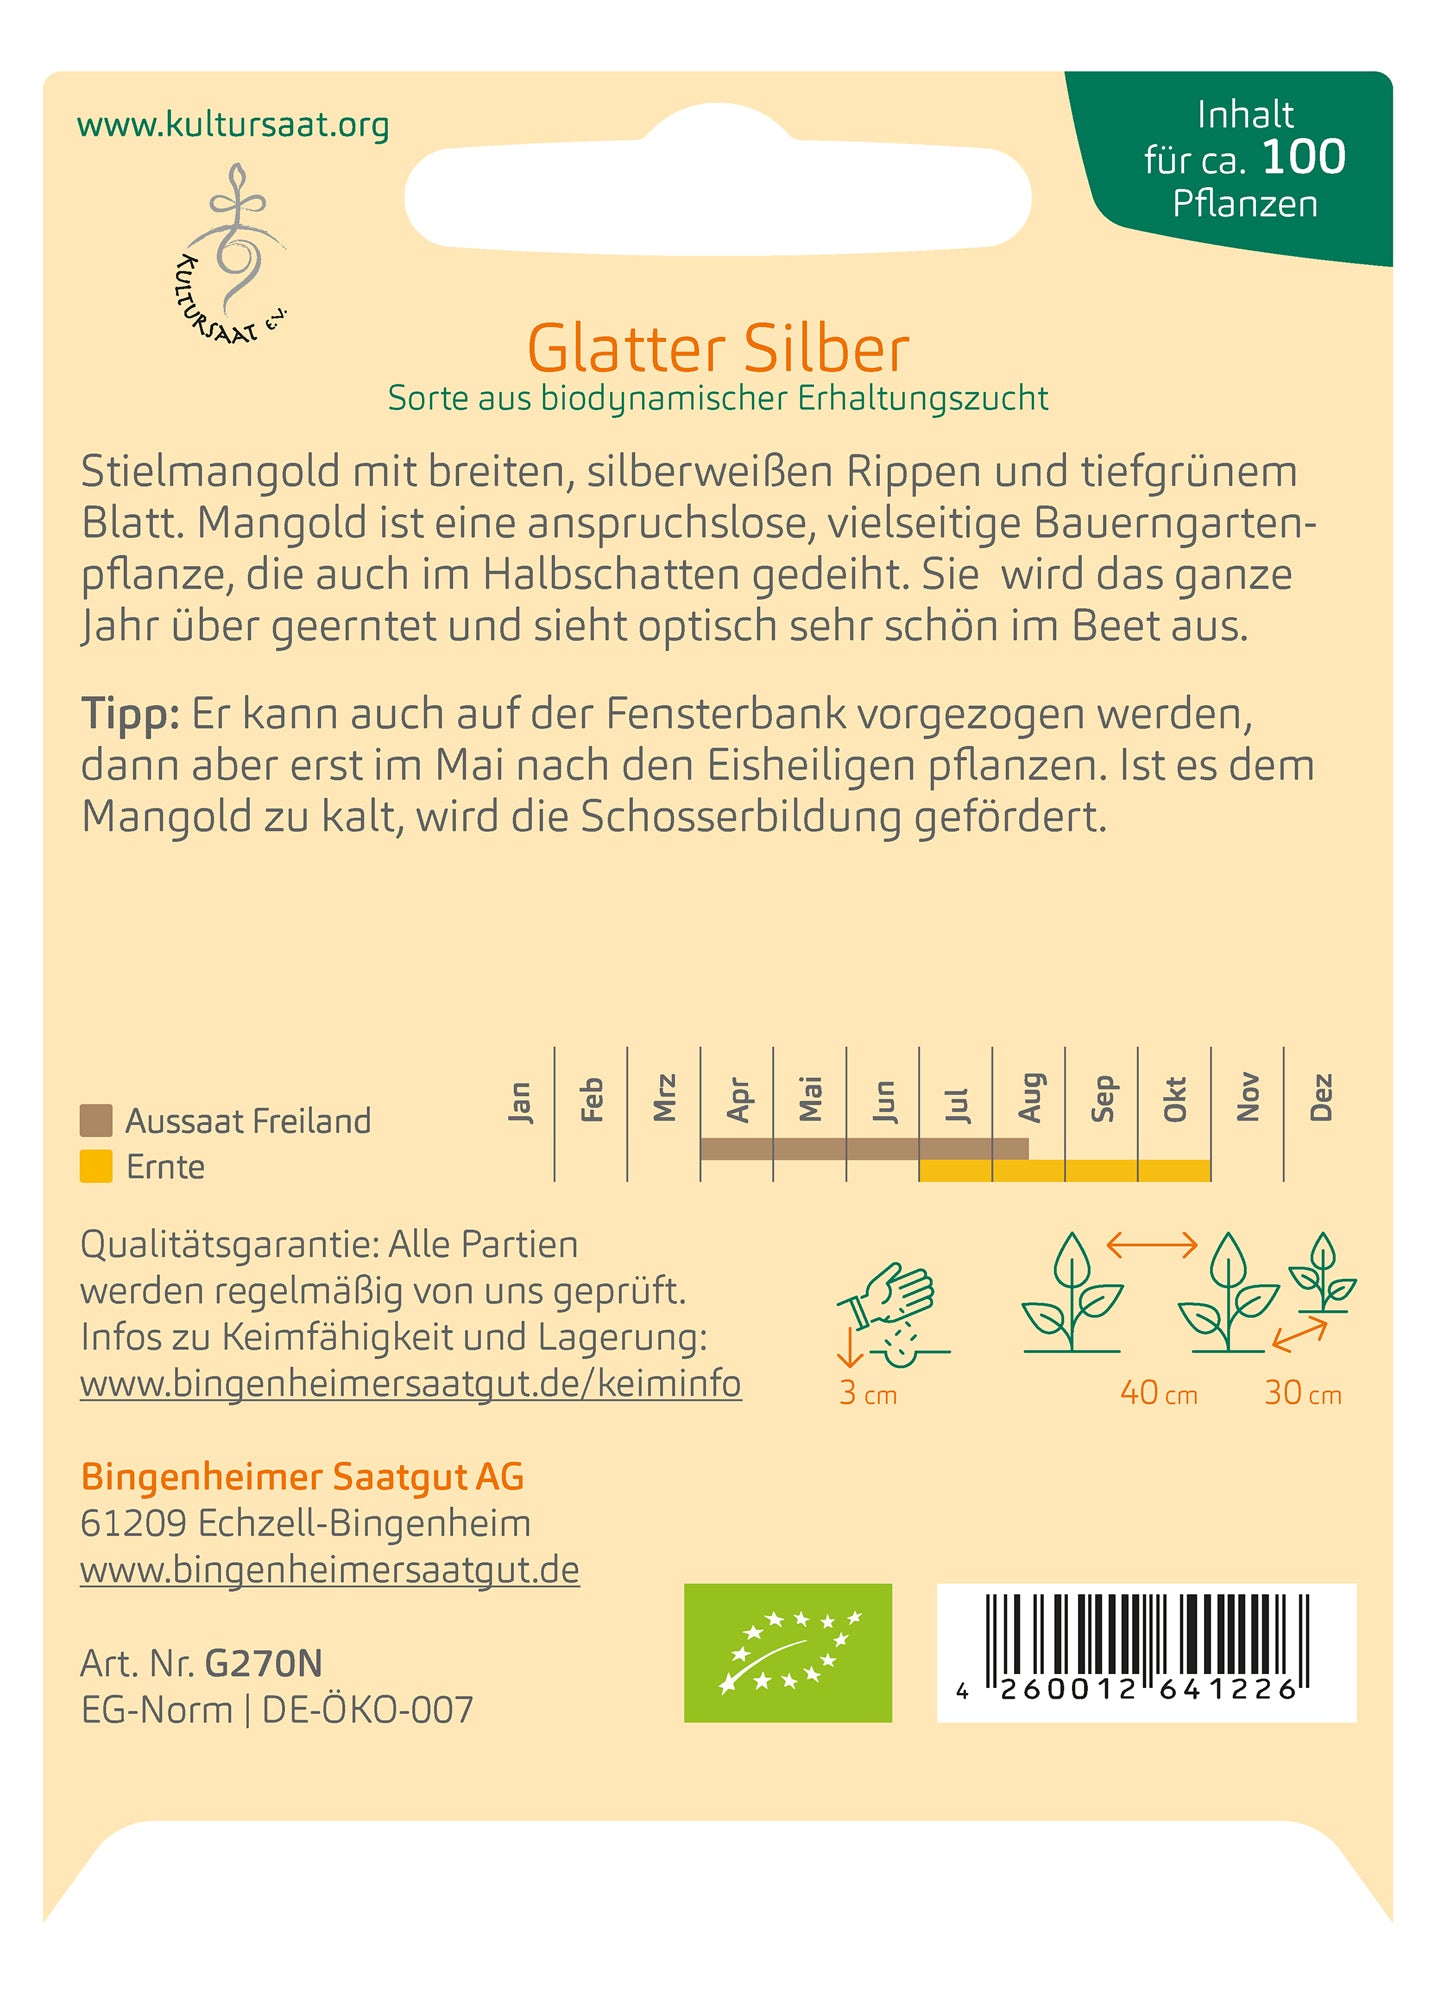 Mangold Glatter Silber | BIO Mangoldsamen von Bingenheimer Saatgut